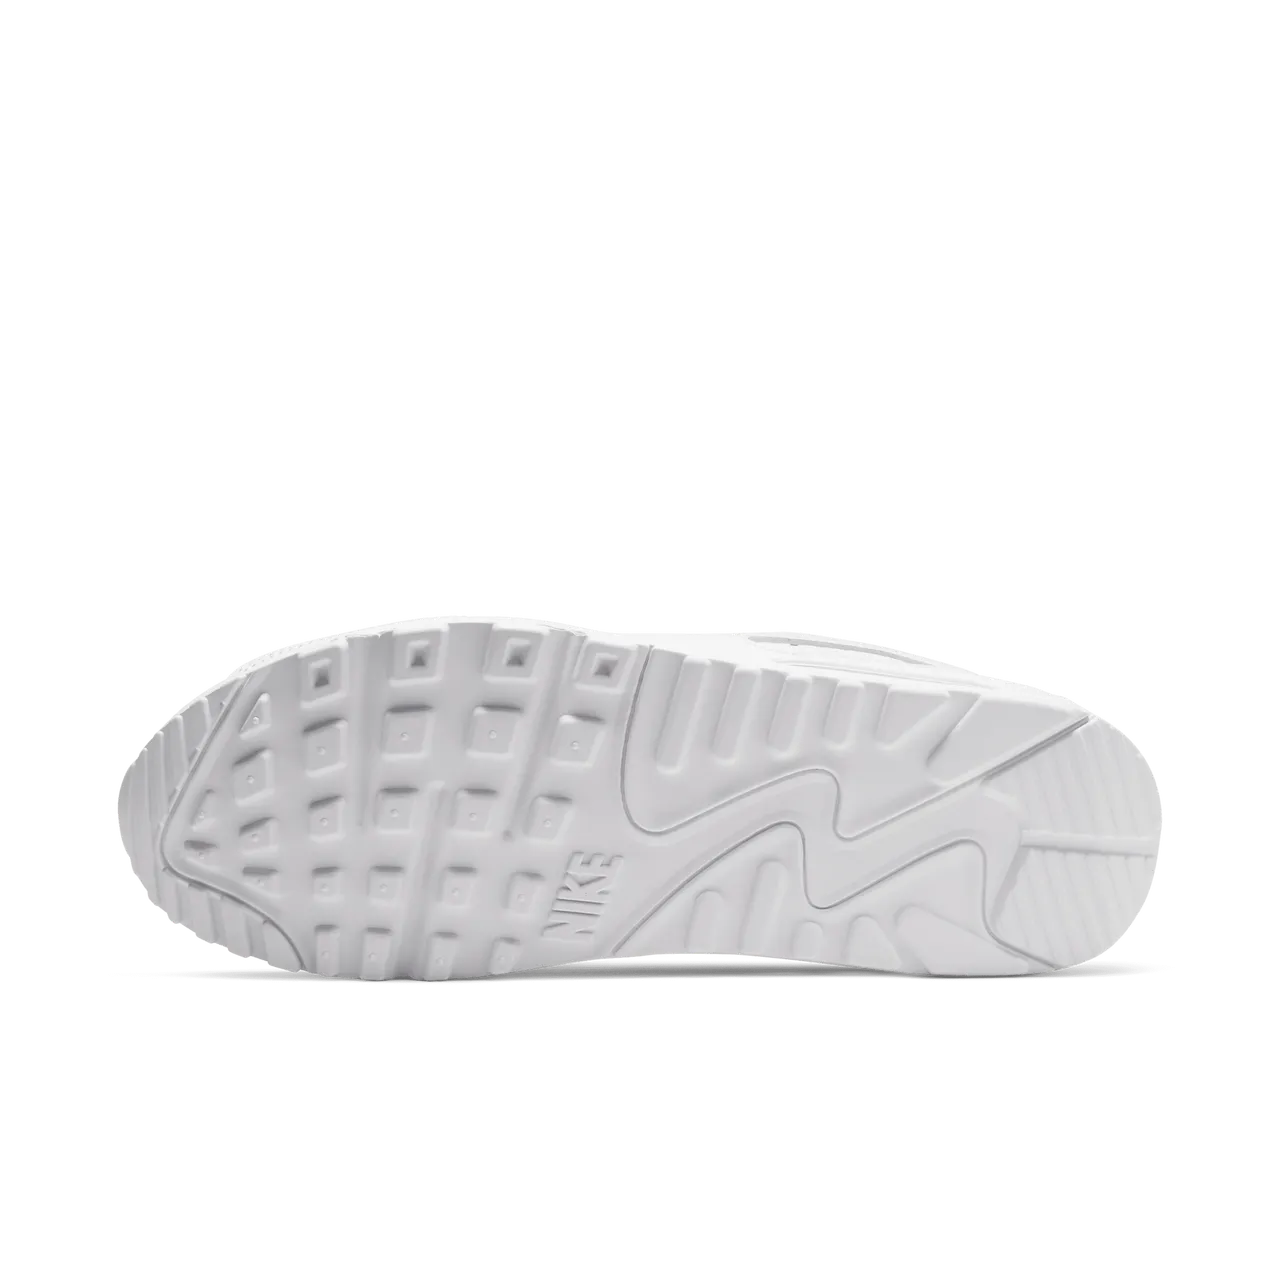 Nike Air Max 90 Men's Shoes - White